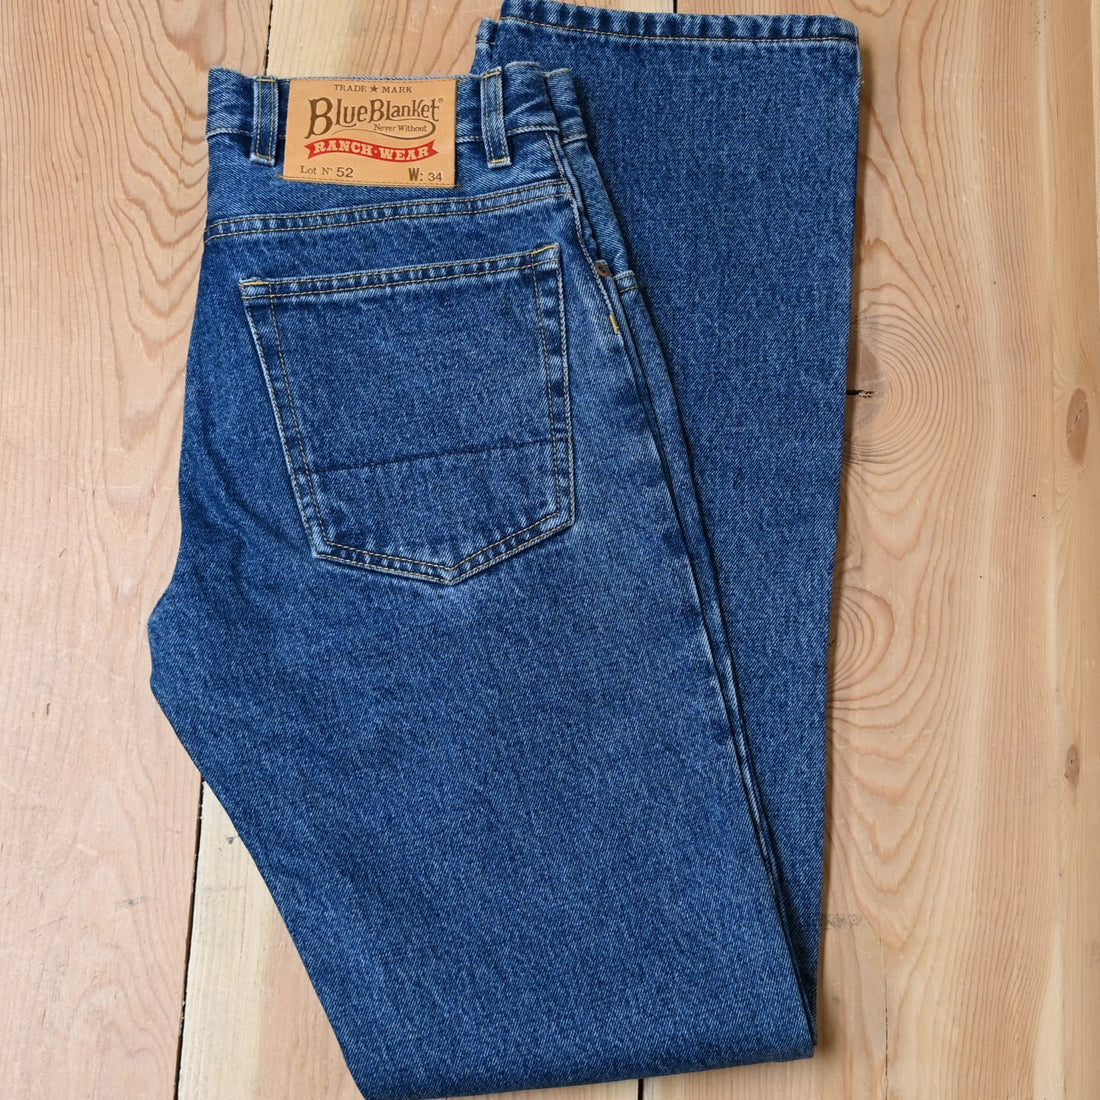 Blue Blanket Mens Medium Denim Jean view of pocket and pant leg